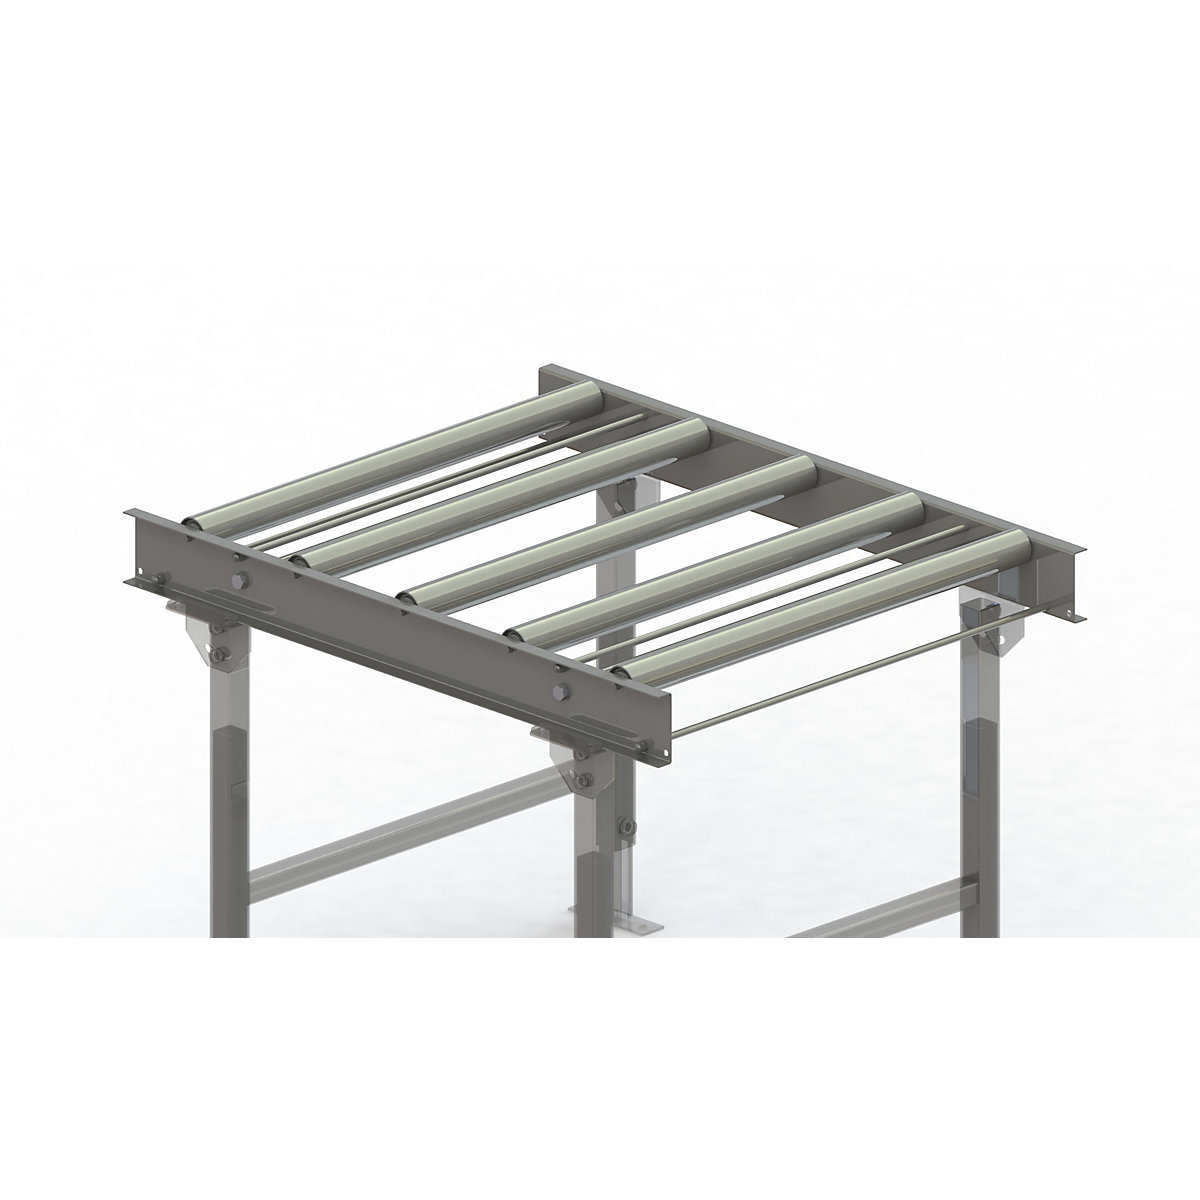 Roller conveyor, steel frame with zinc plated steel rollers – Gura